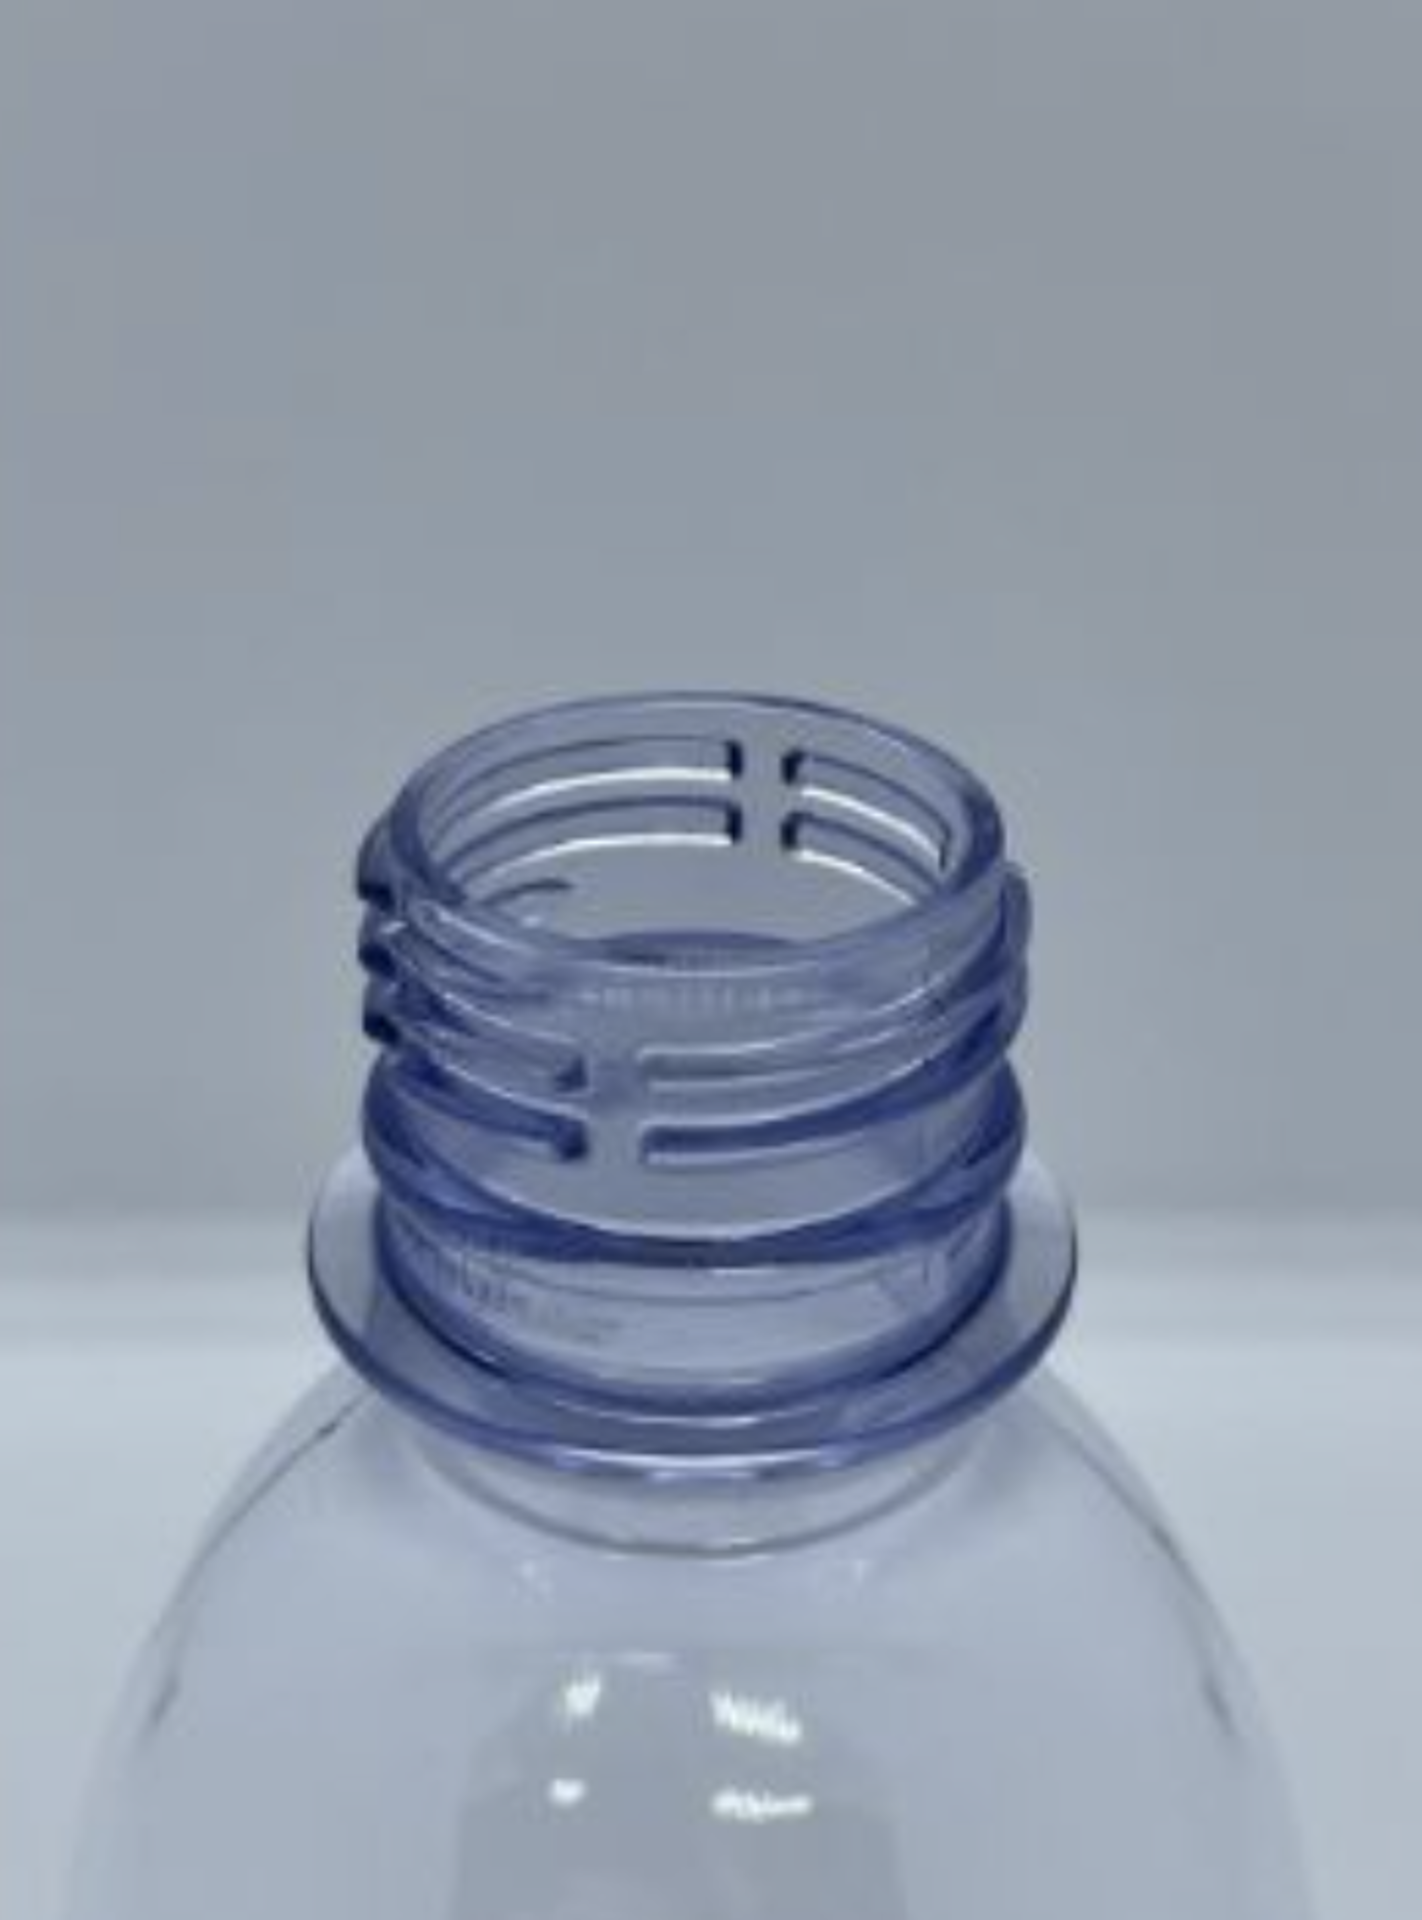 79,000 - 8 oz Empty Plastic Water Bottles, Neck Threading 28-410, 5.25" Tall x 2.25" Diameter - Image 3 of 5